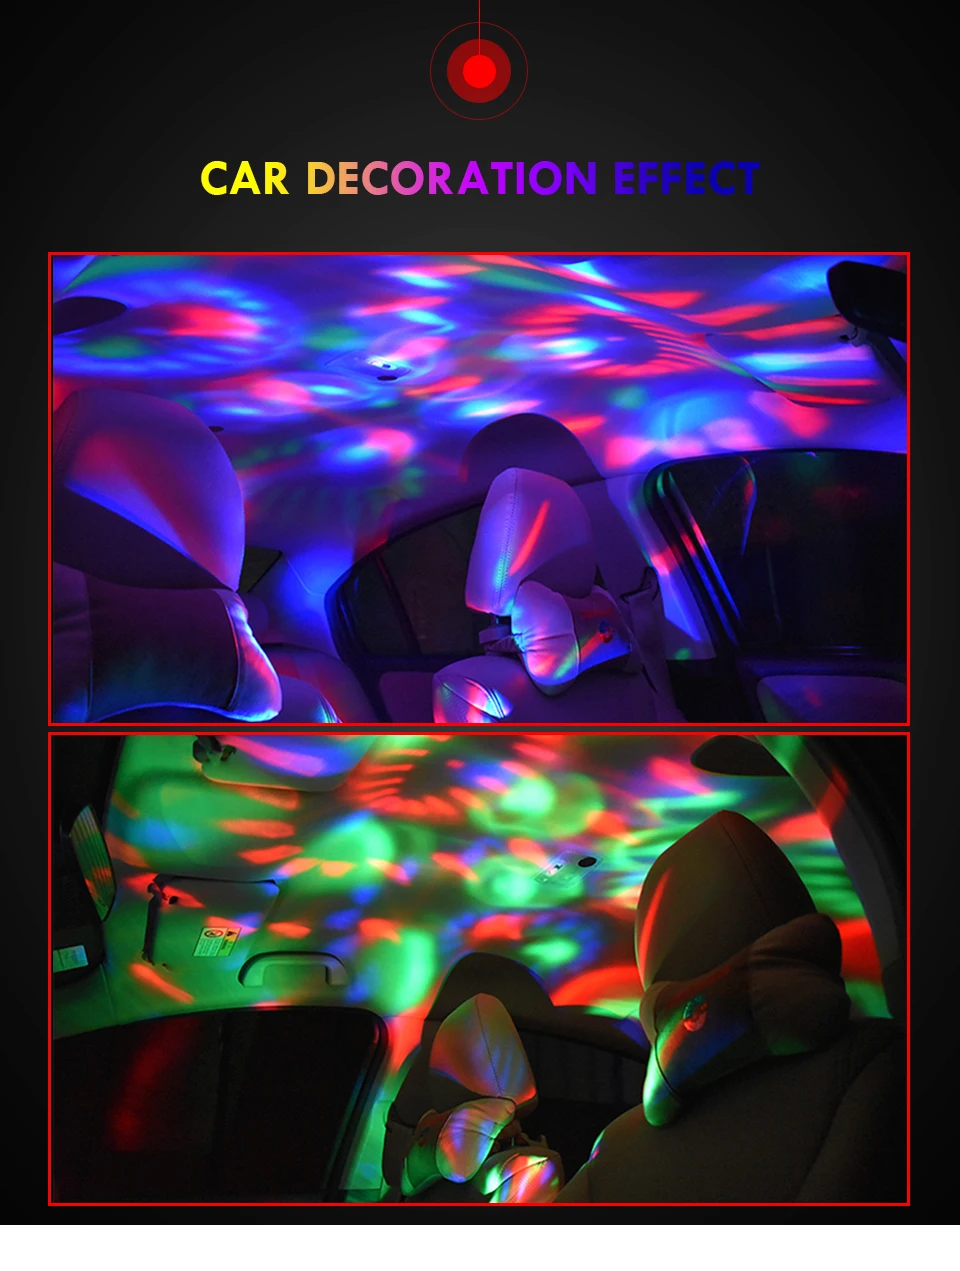 USB Sound Control Decorative LED Lights Christmas Holiday Decoration Rotate Disco Ball Dj Stage Light RGB Wedding Party Lights (12)